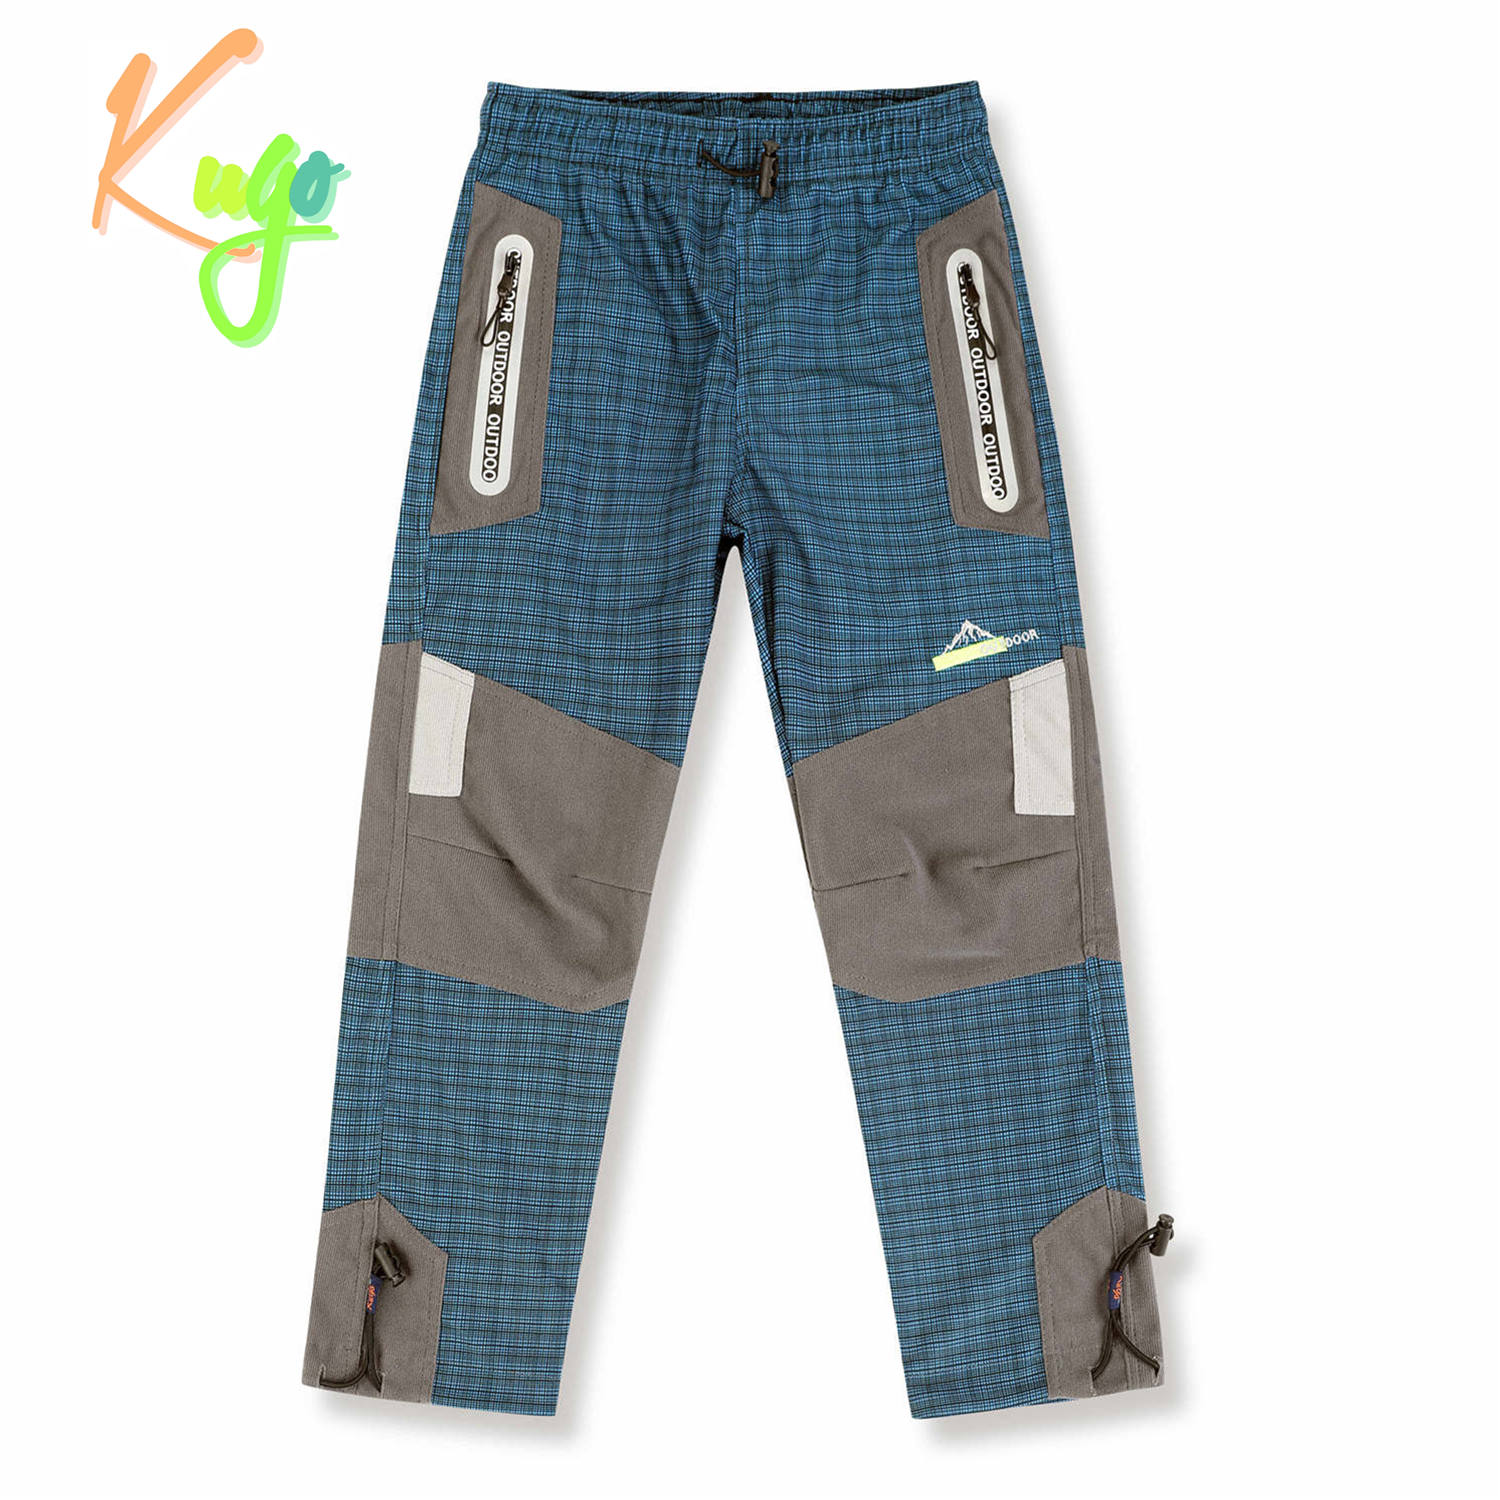 Chlapecké outdoorové kalhoty - KUGO G9781, petrol Barva: Petrol, Velikost: 98